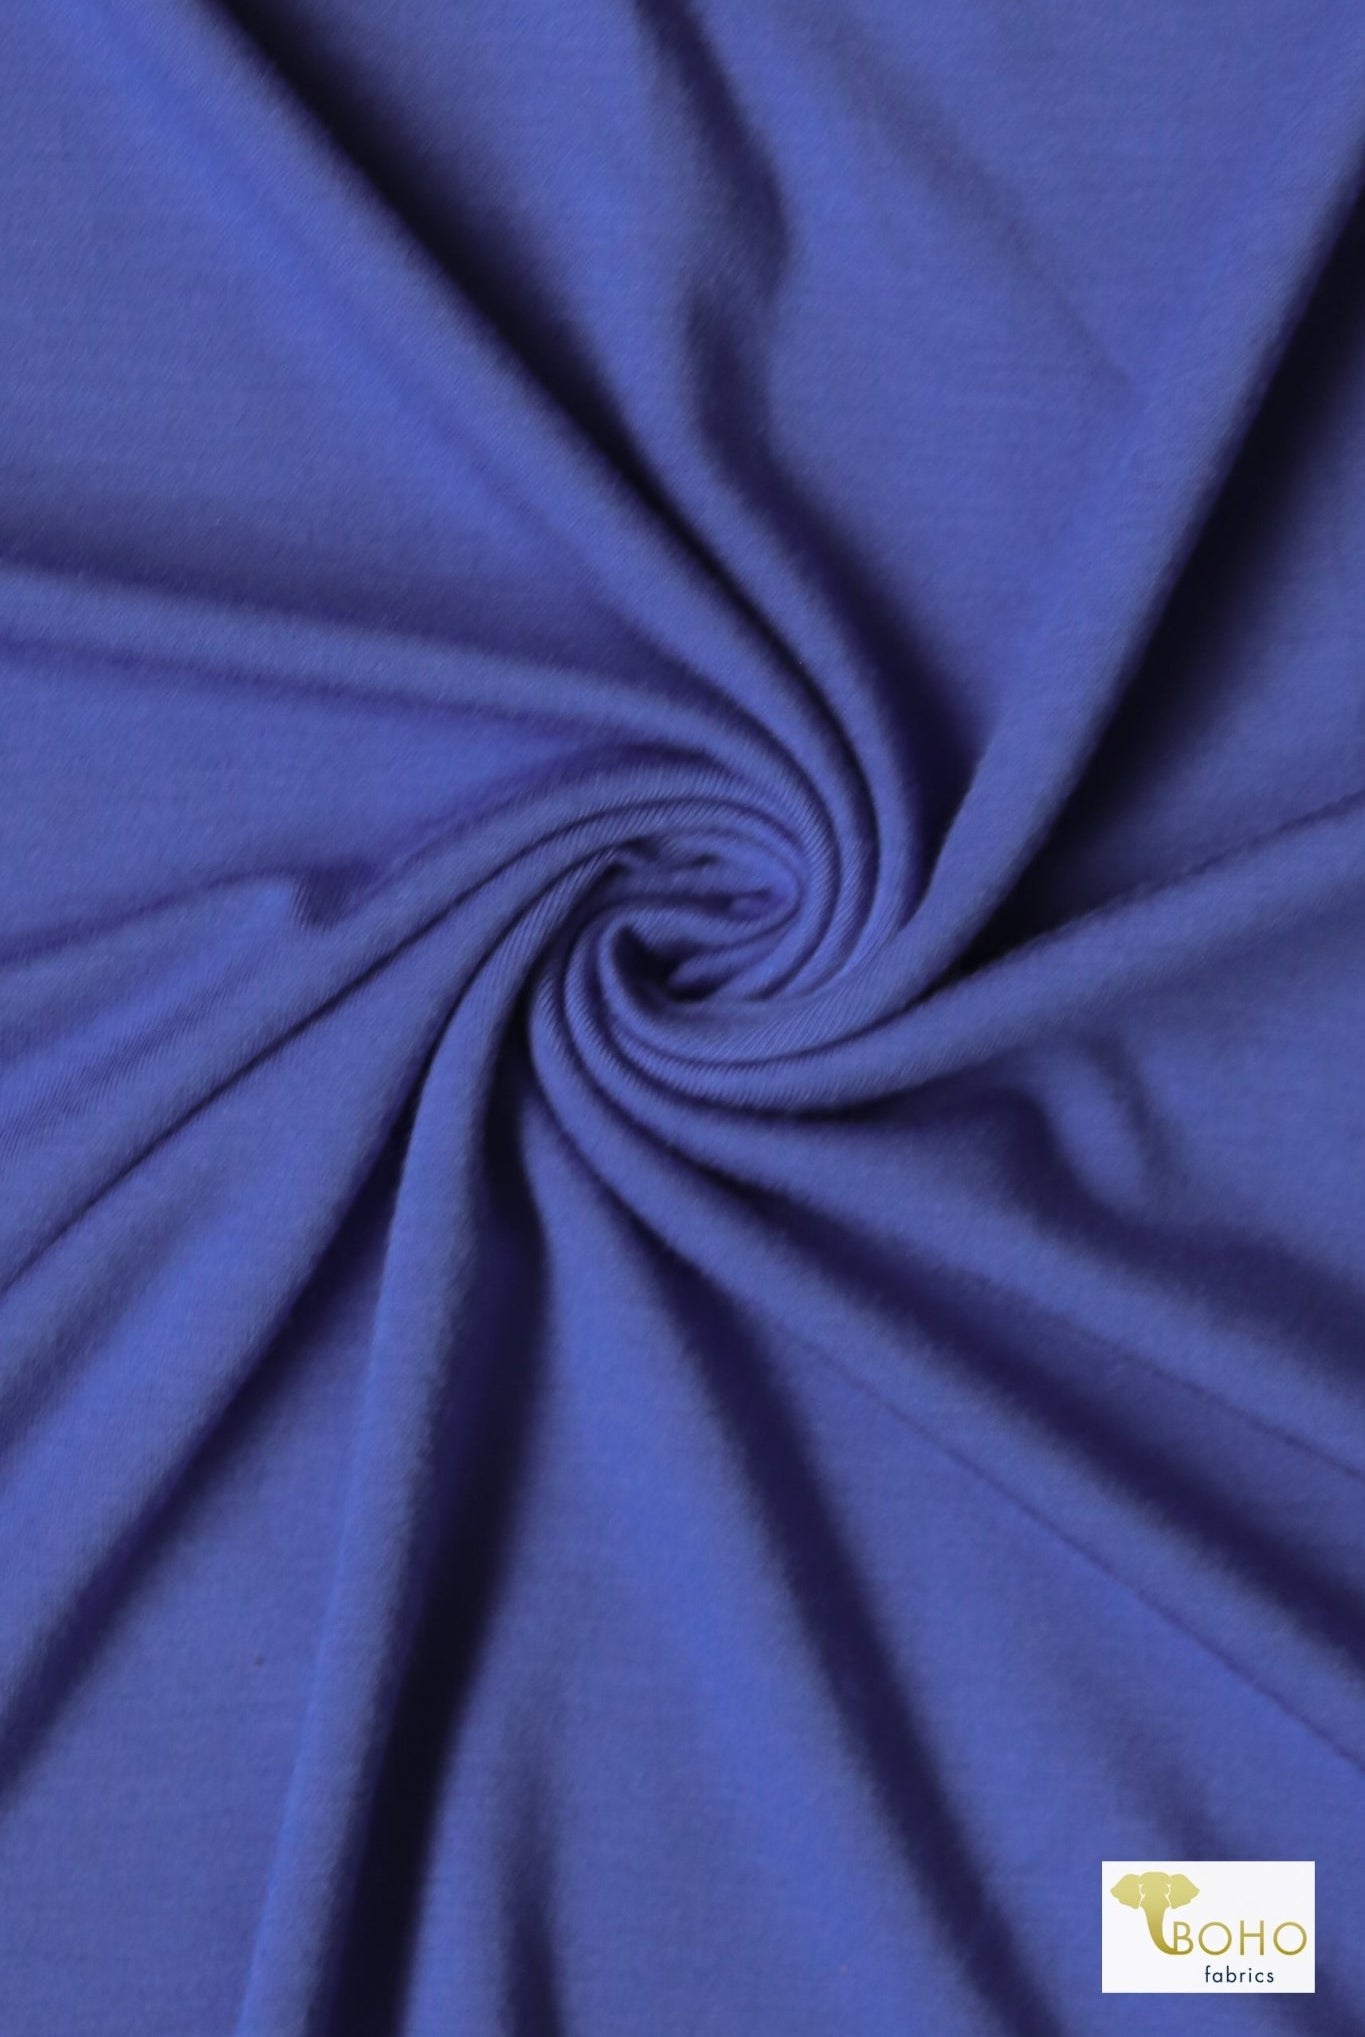 Blue Violet, Rayon Spandex Knit. - Boho Fabrics